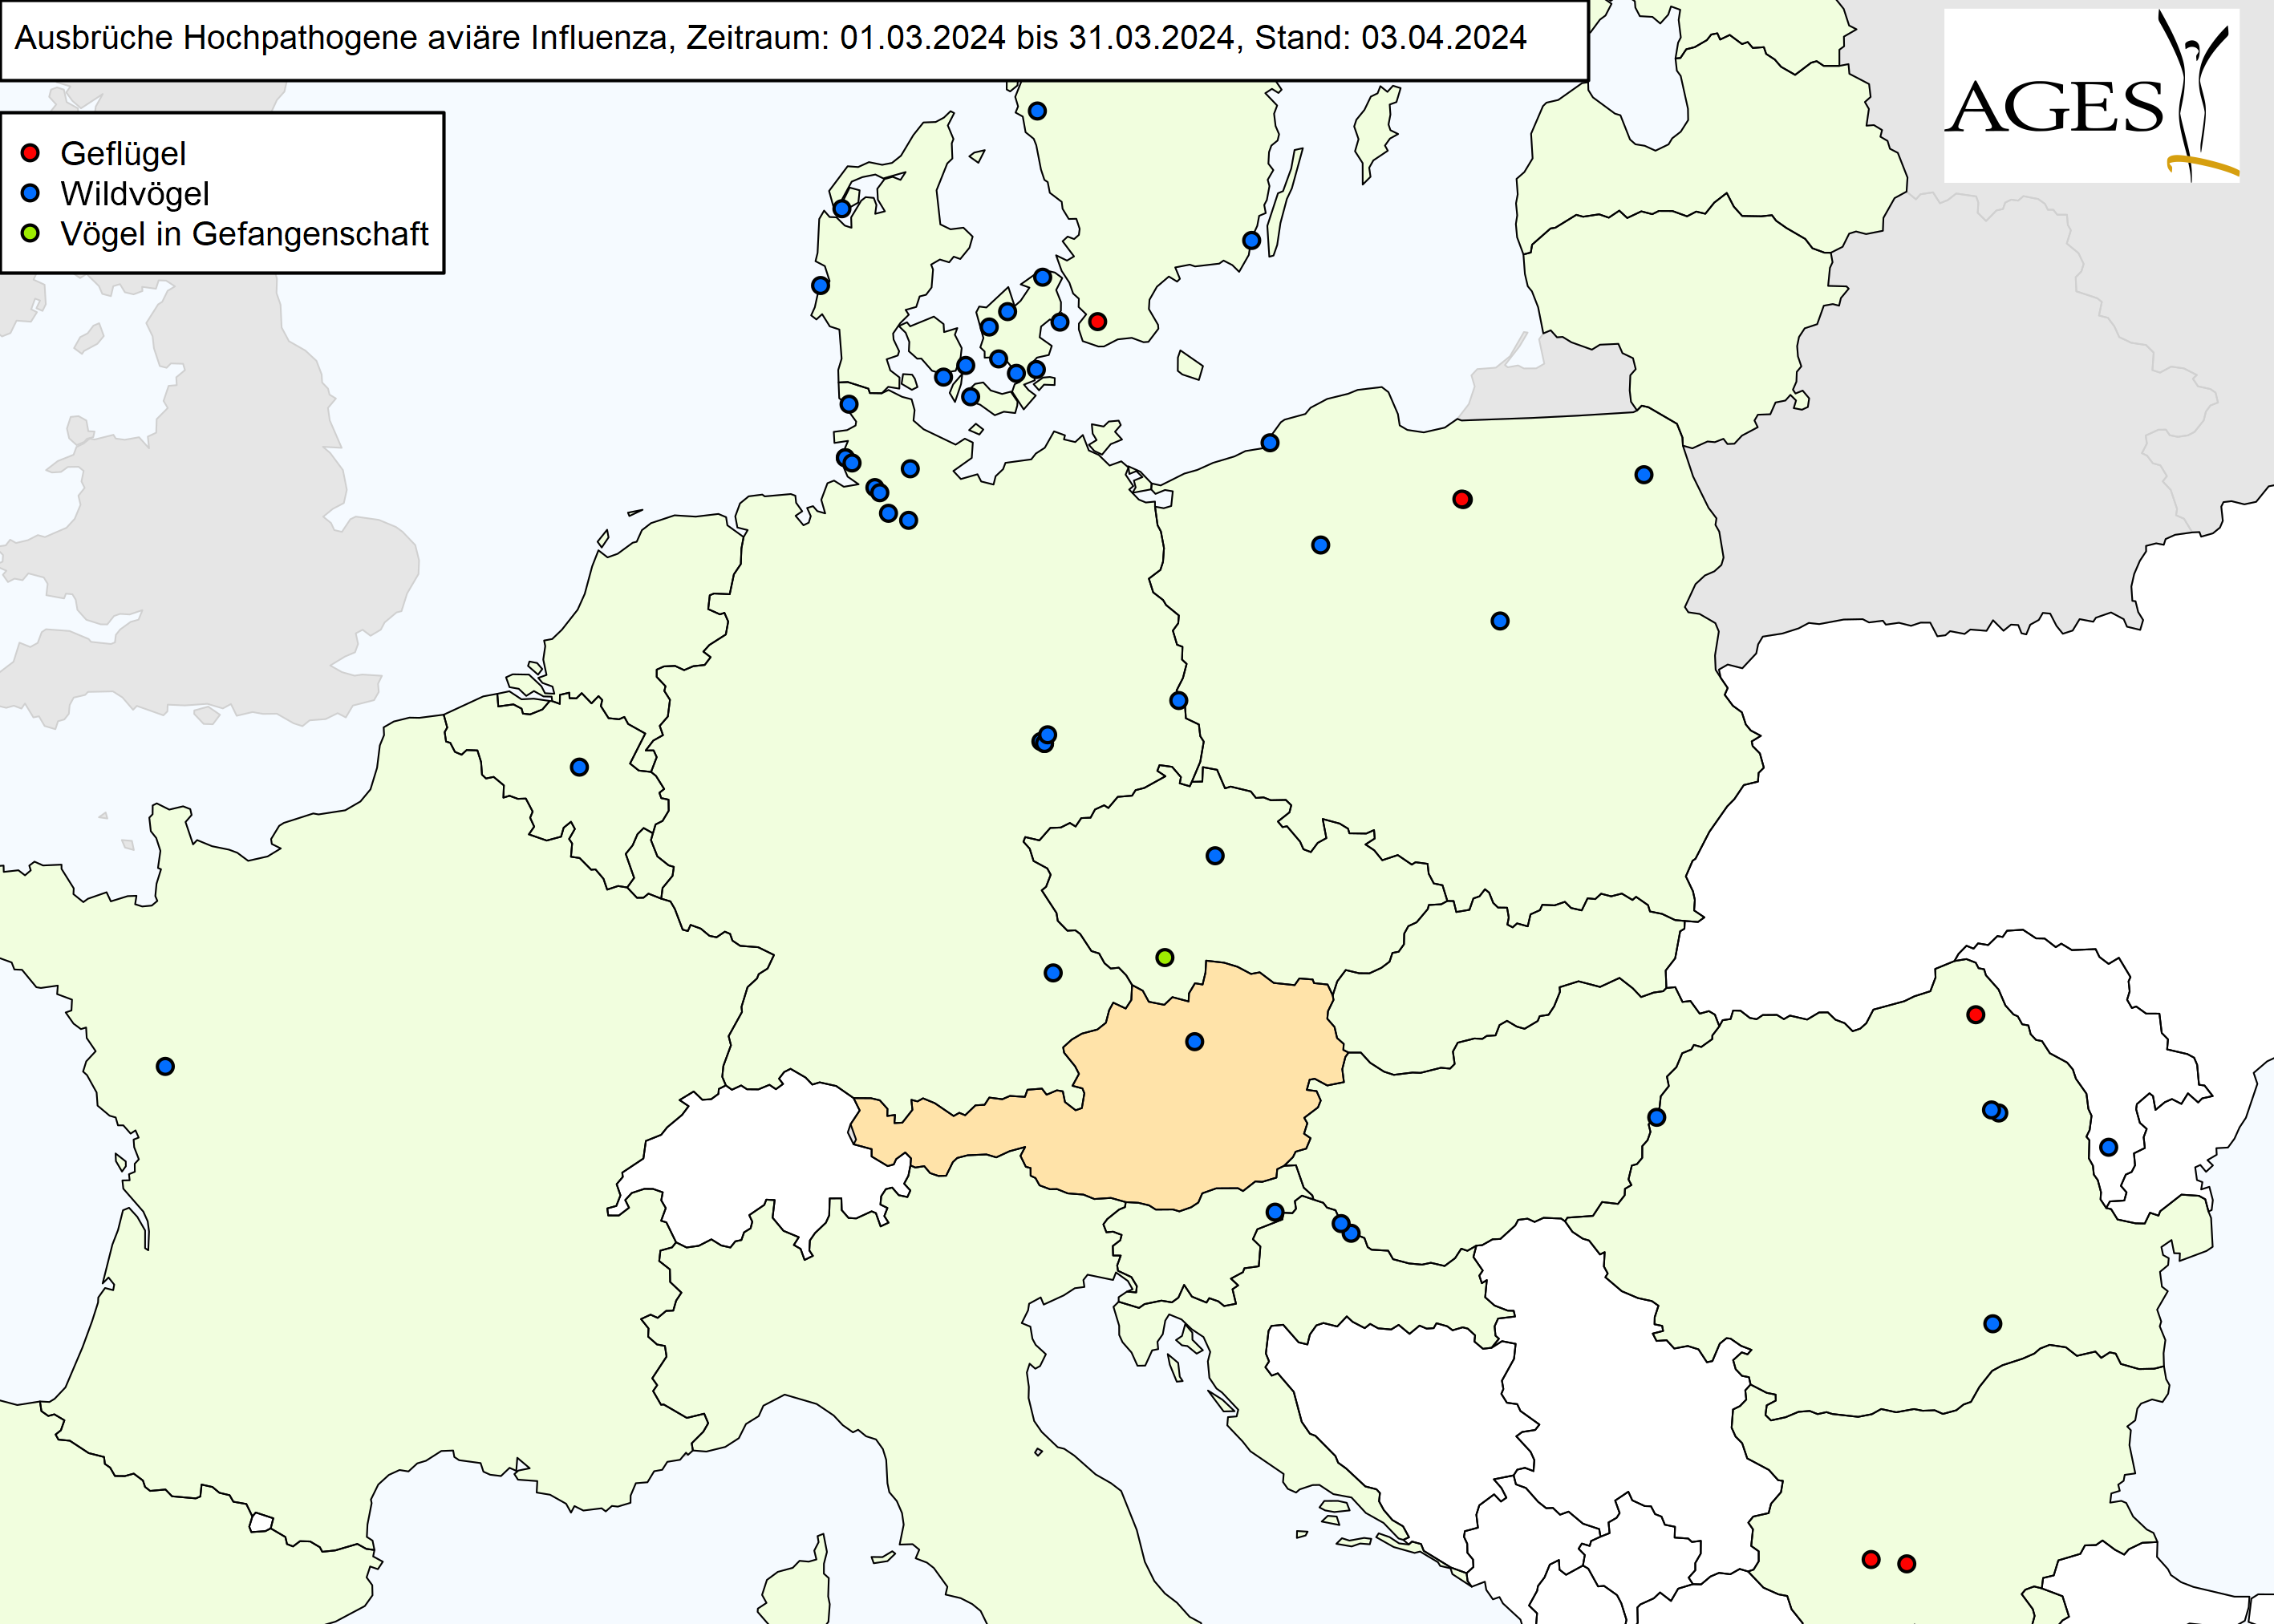 Europakarte zu HPAI-Ausbrüchen wie in "Situation in Europa" beschrieben.